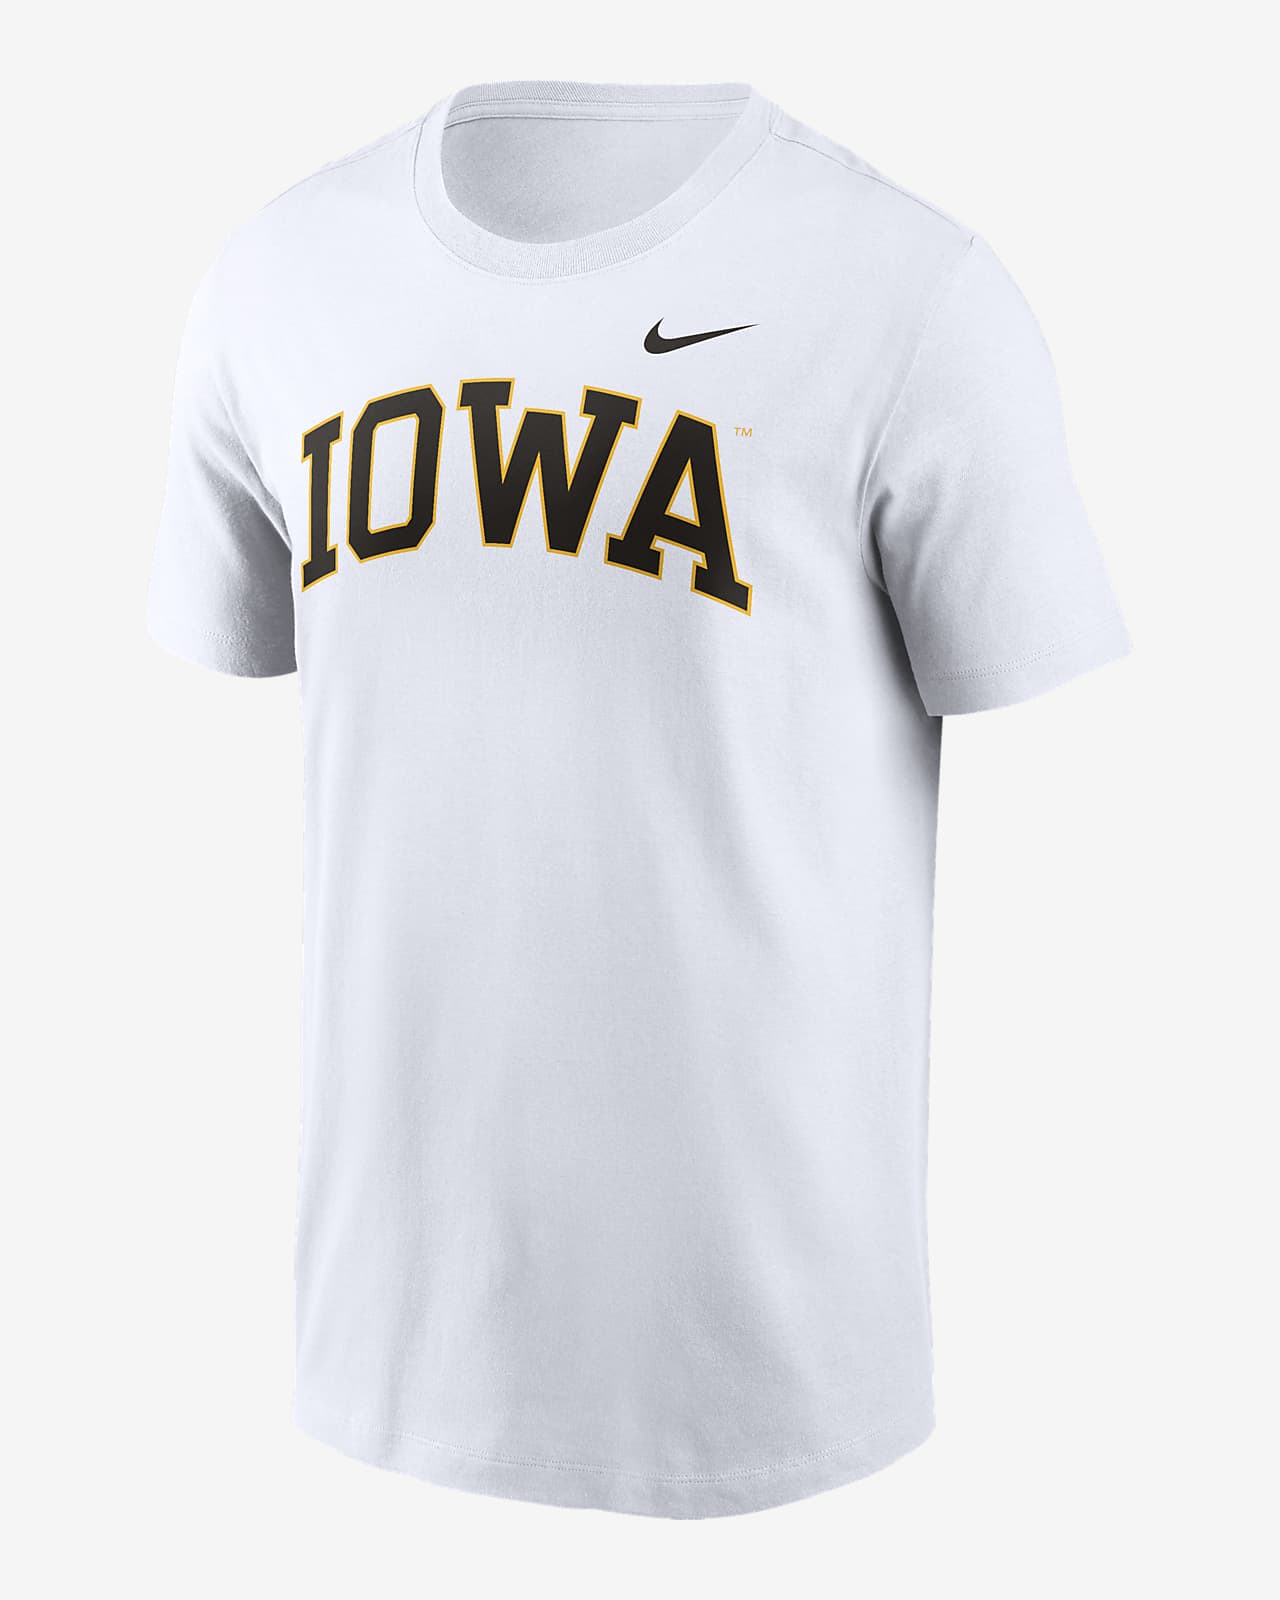 Playera universitaria Nike para hombre Iowa Hawkeyes Blitz